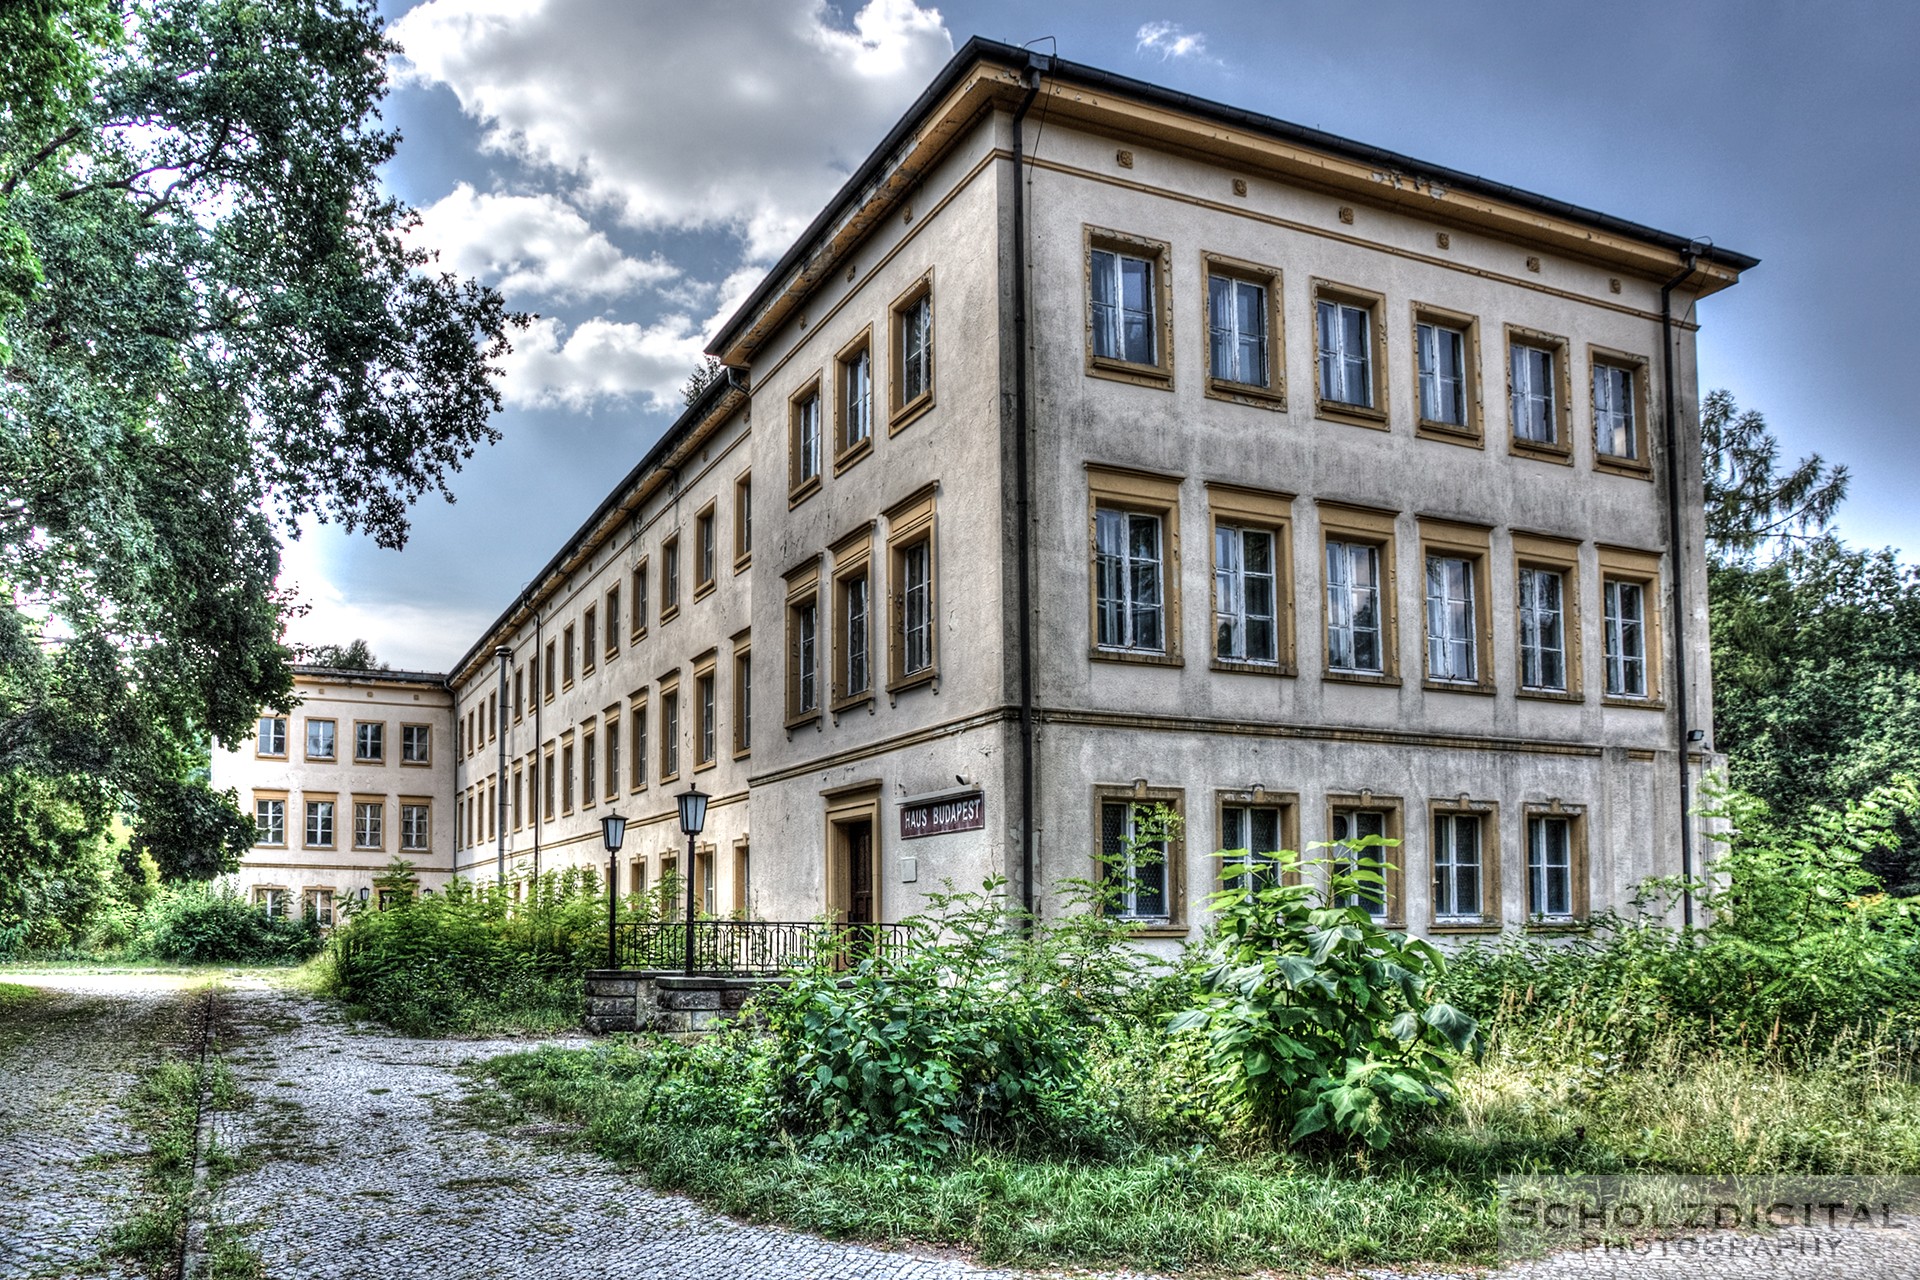 Jugendhochschule Bogensee